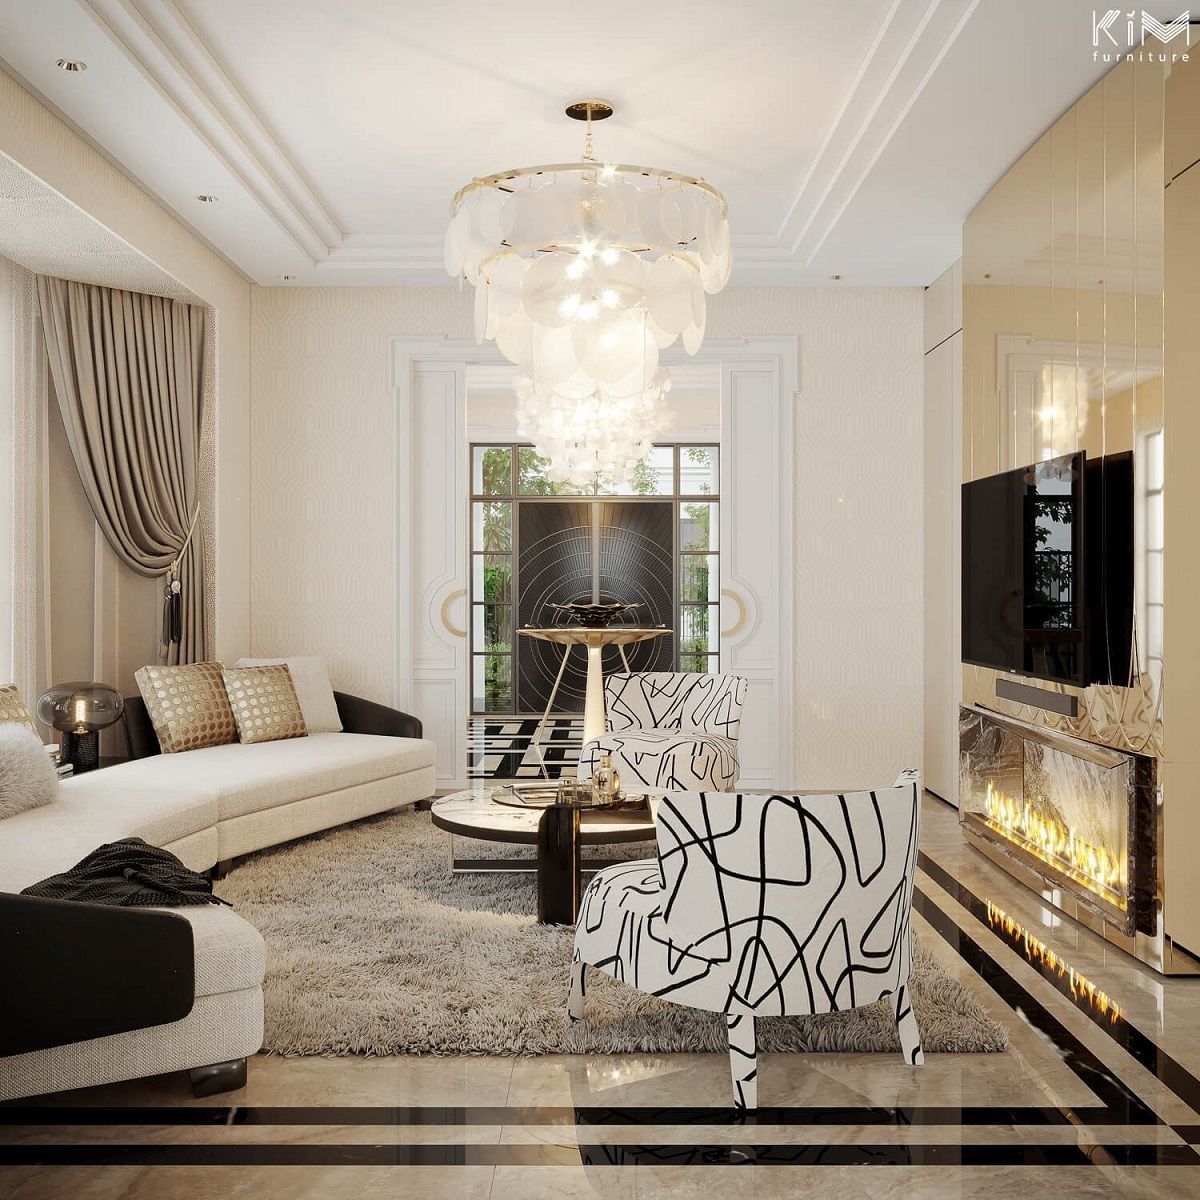 kienviet biet thu harmony ke cau chuyen modern classic theo cach mong mo kim luxury interior design 7